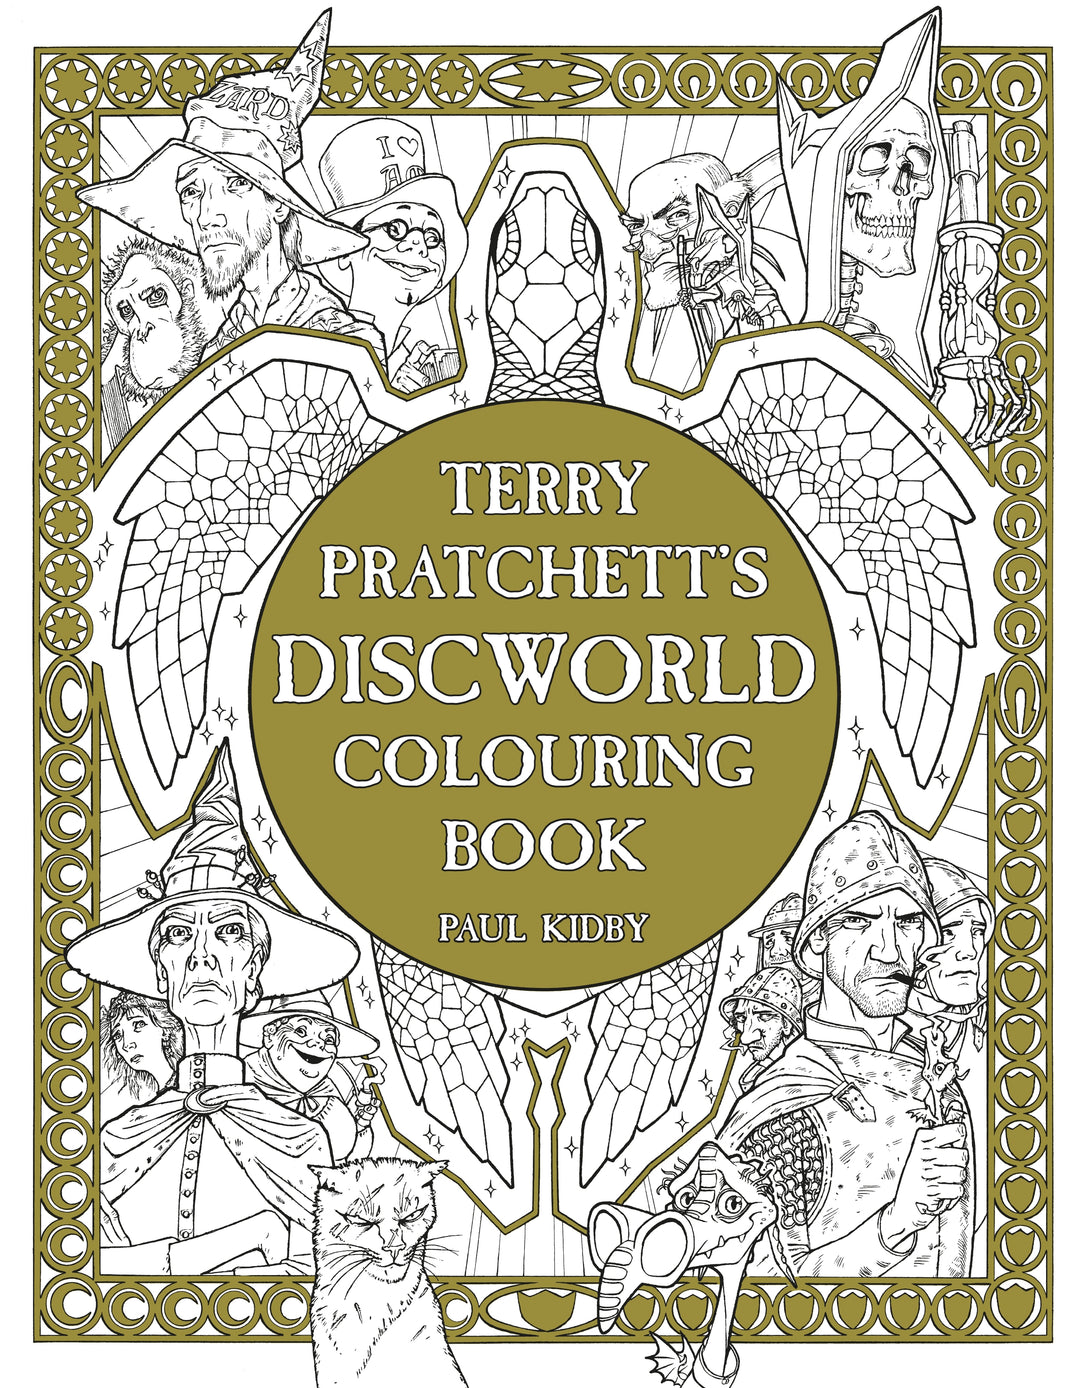 Terry Pratchett's Discworld Colouring Book by Paul Kidby